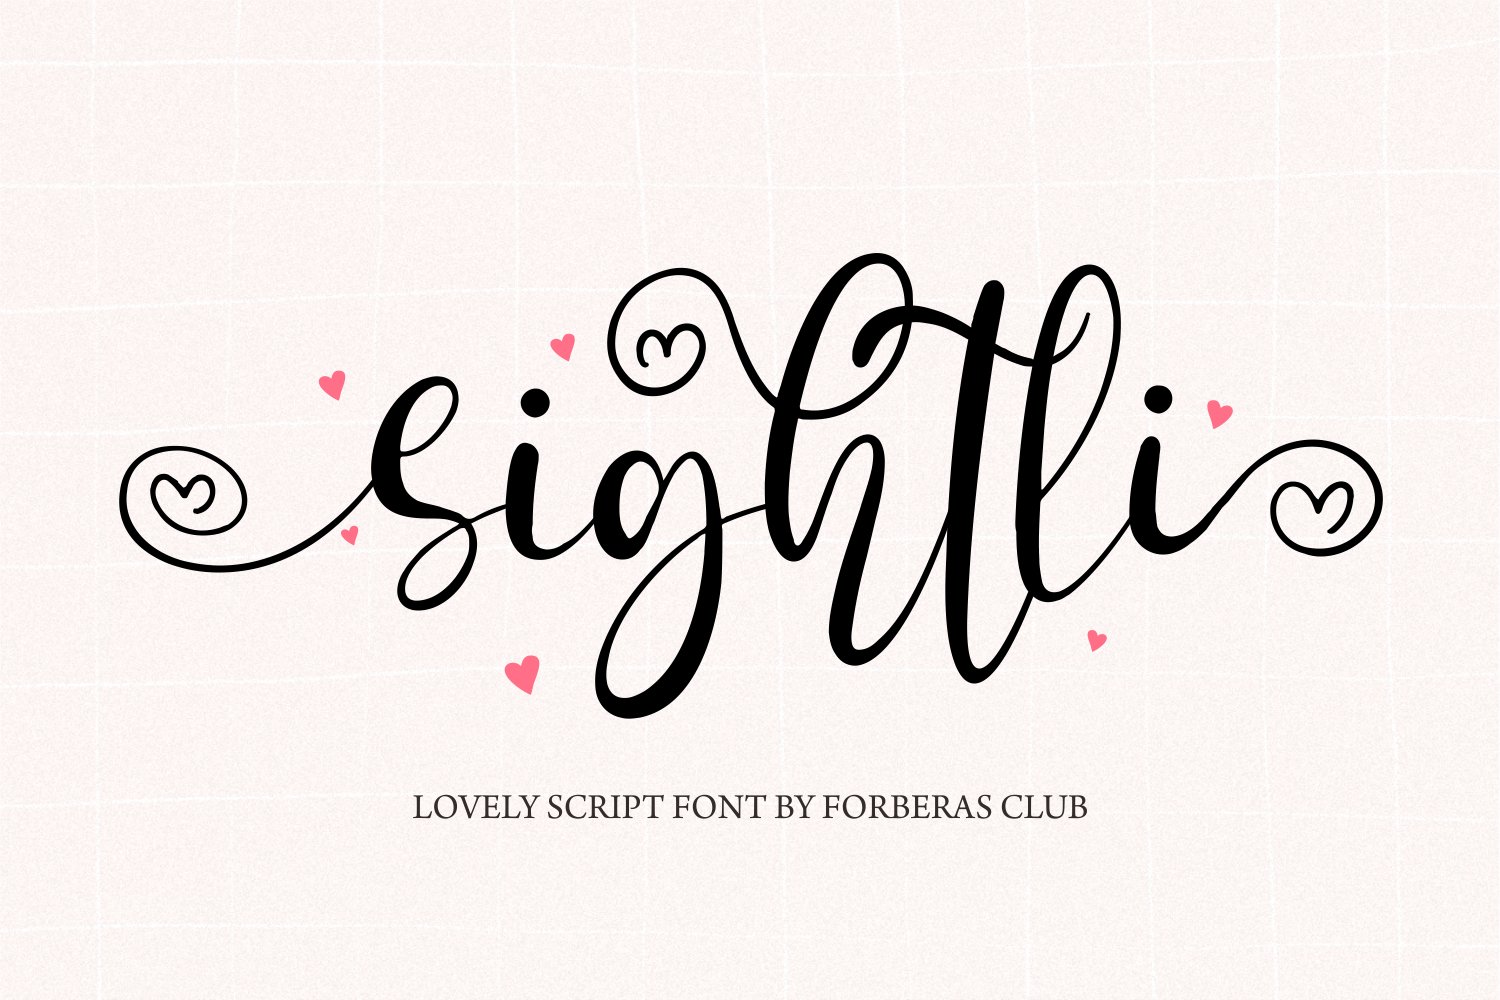 Sightli | Script Handwritten Font cover image.